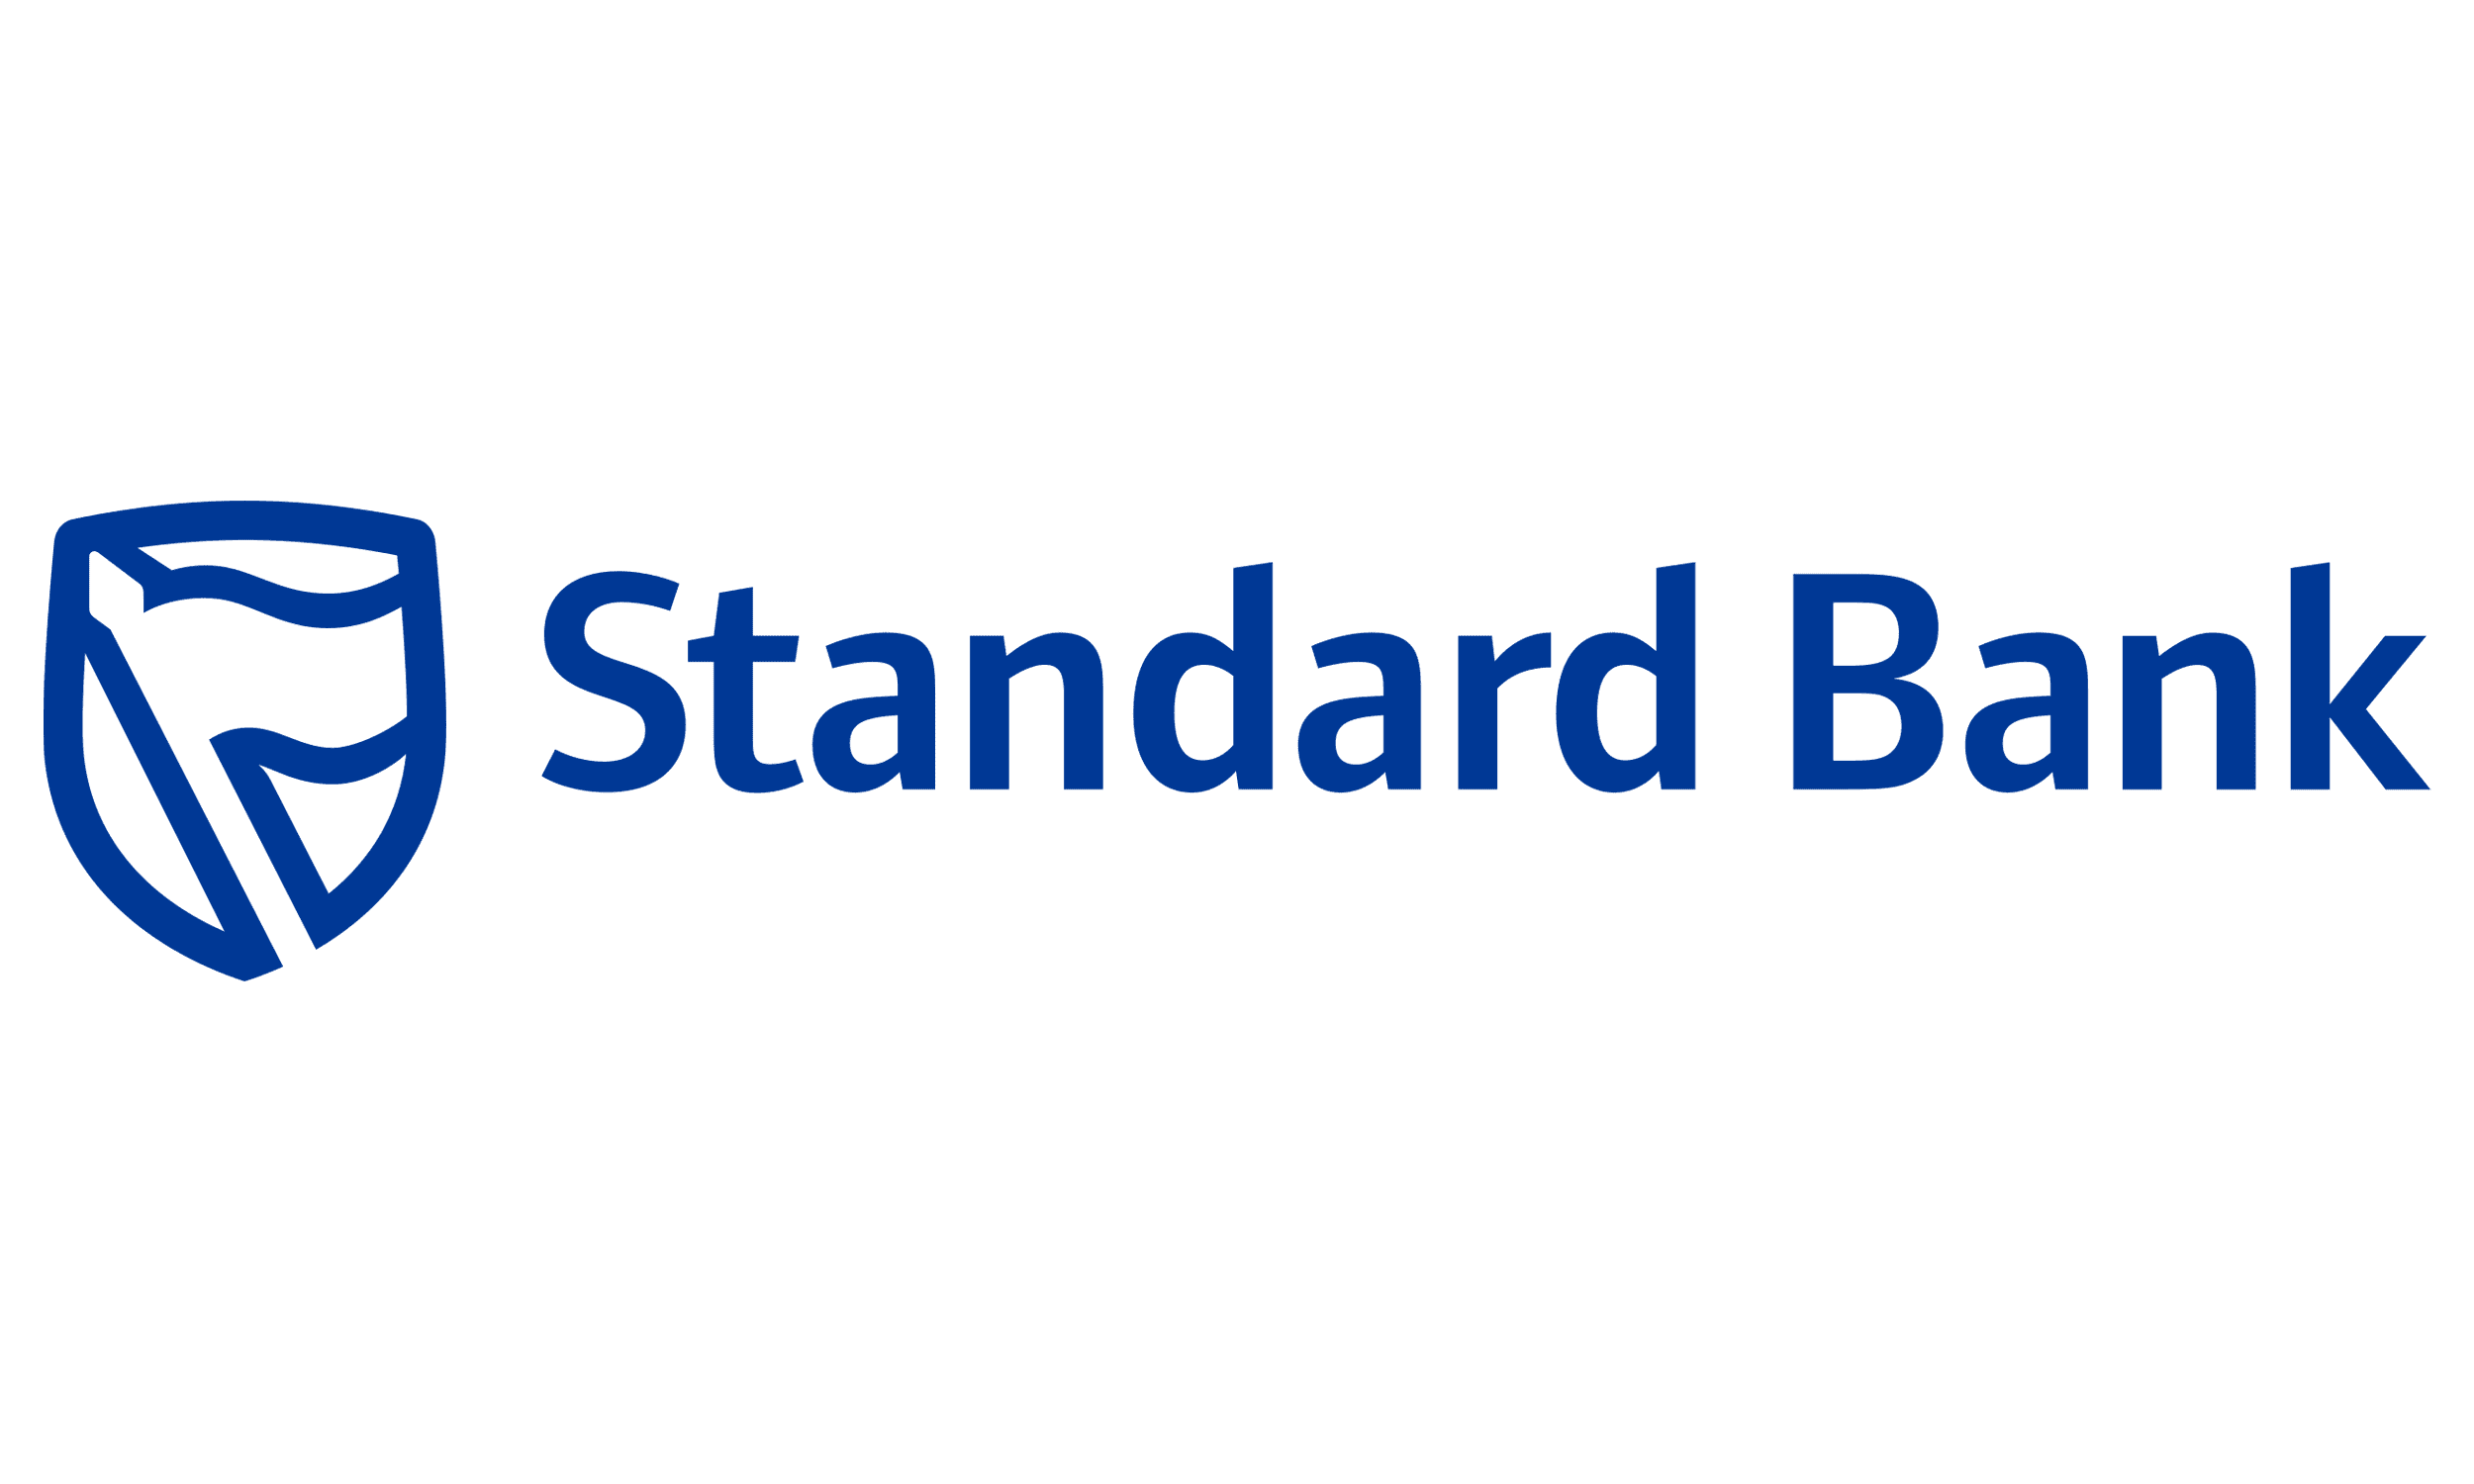 Банки логотипы png. Standard Bank. Логотипы банков. Логотип британского банка. CIB Bank лого.